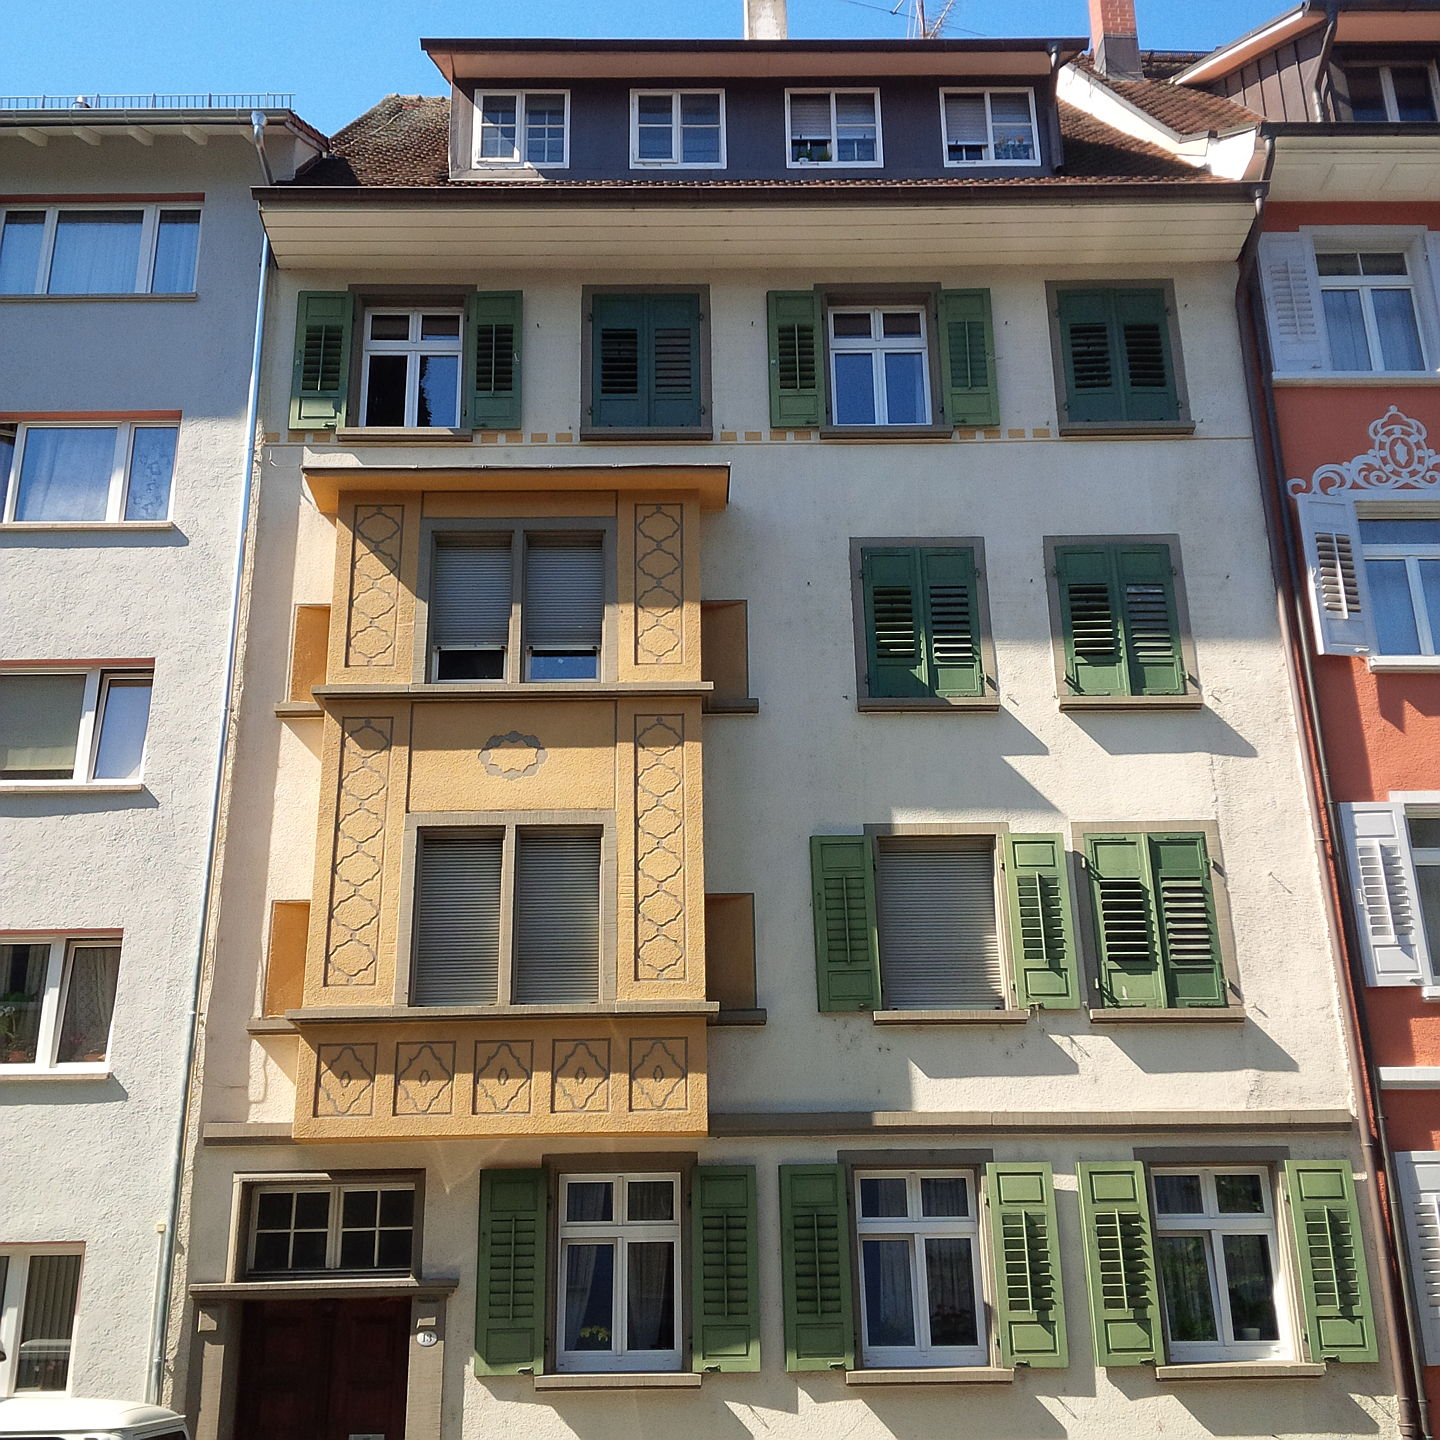  Konstanz
- IMG_20150831_115009.jpg